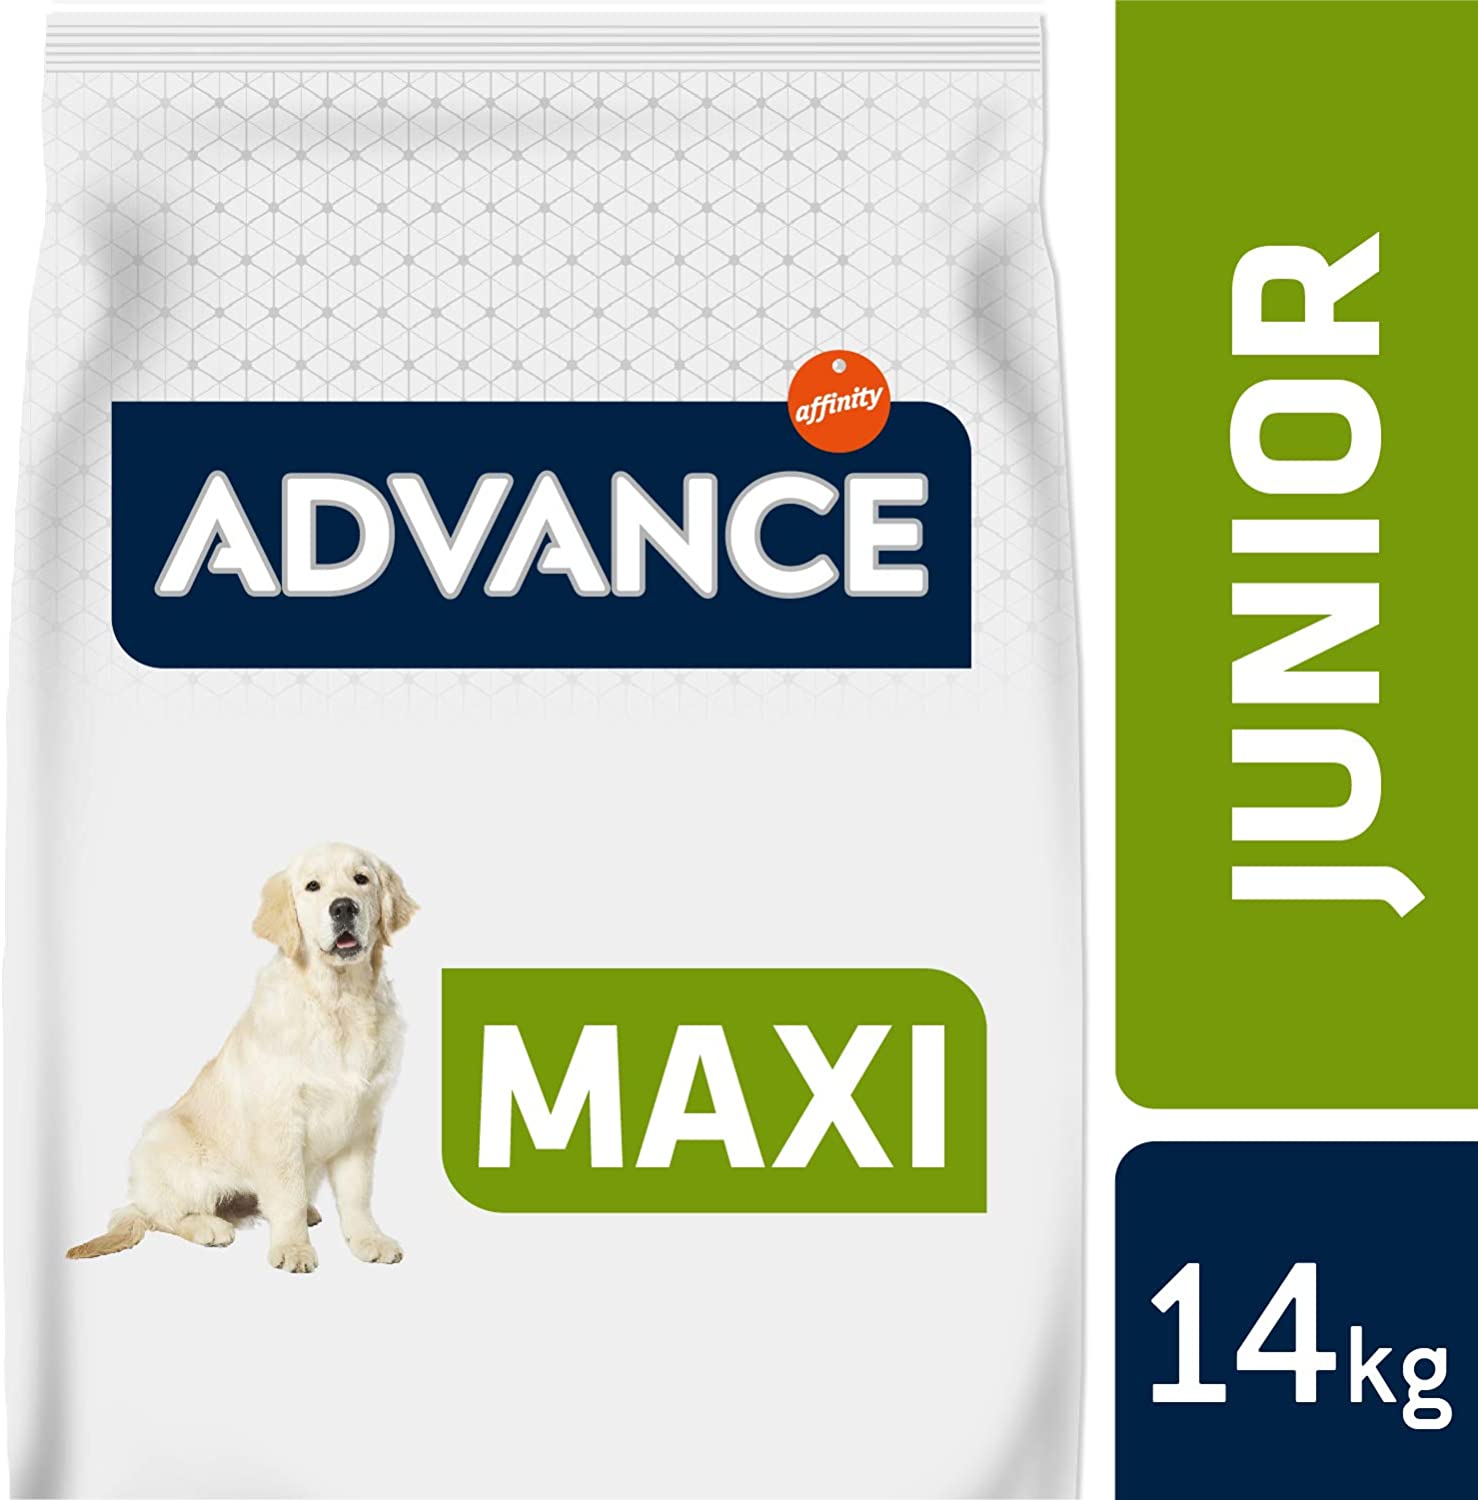  Advance Junior Maxi - Comida seca para cachorros, 14 kg 